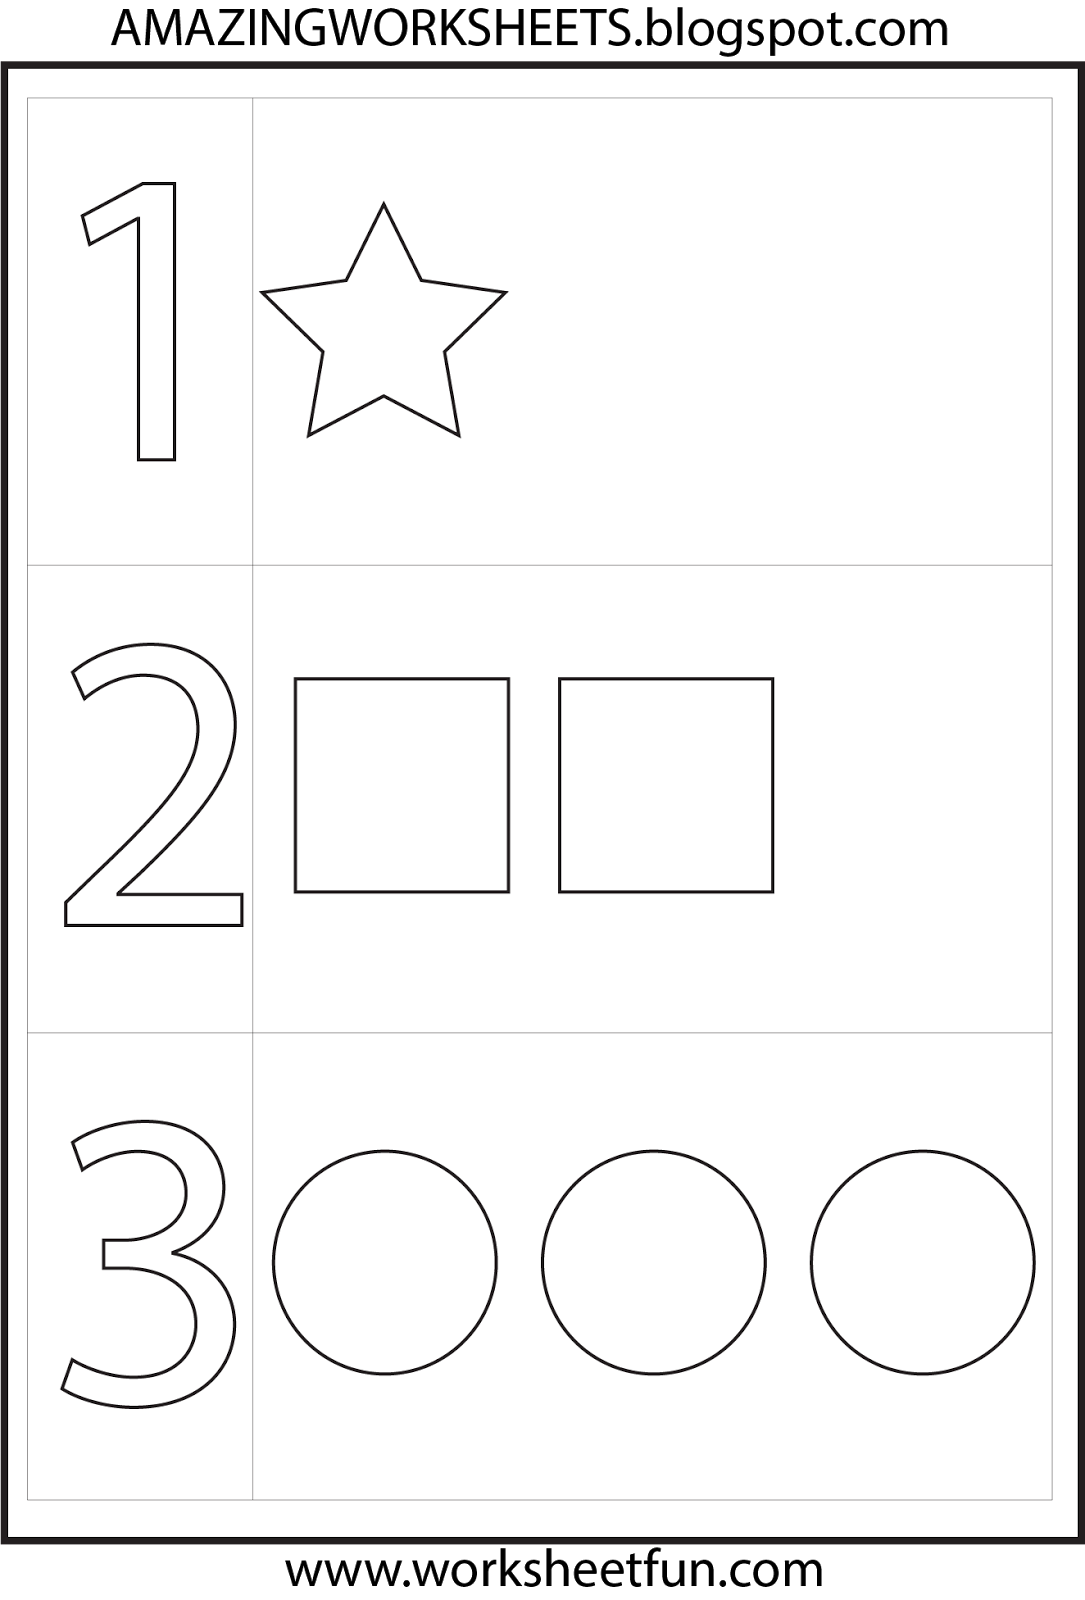 Printable Activity Sheets For Preschoolers